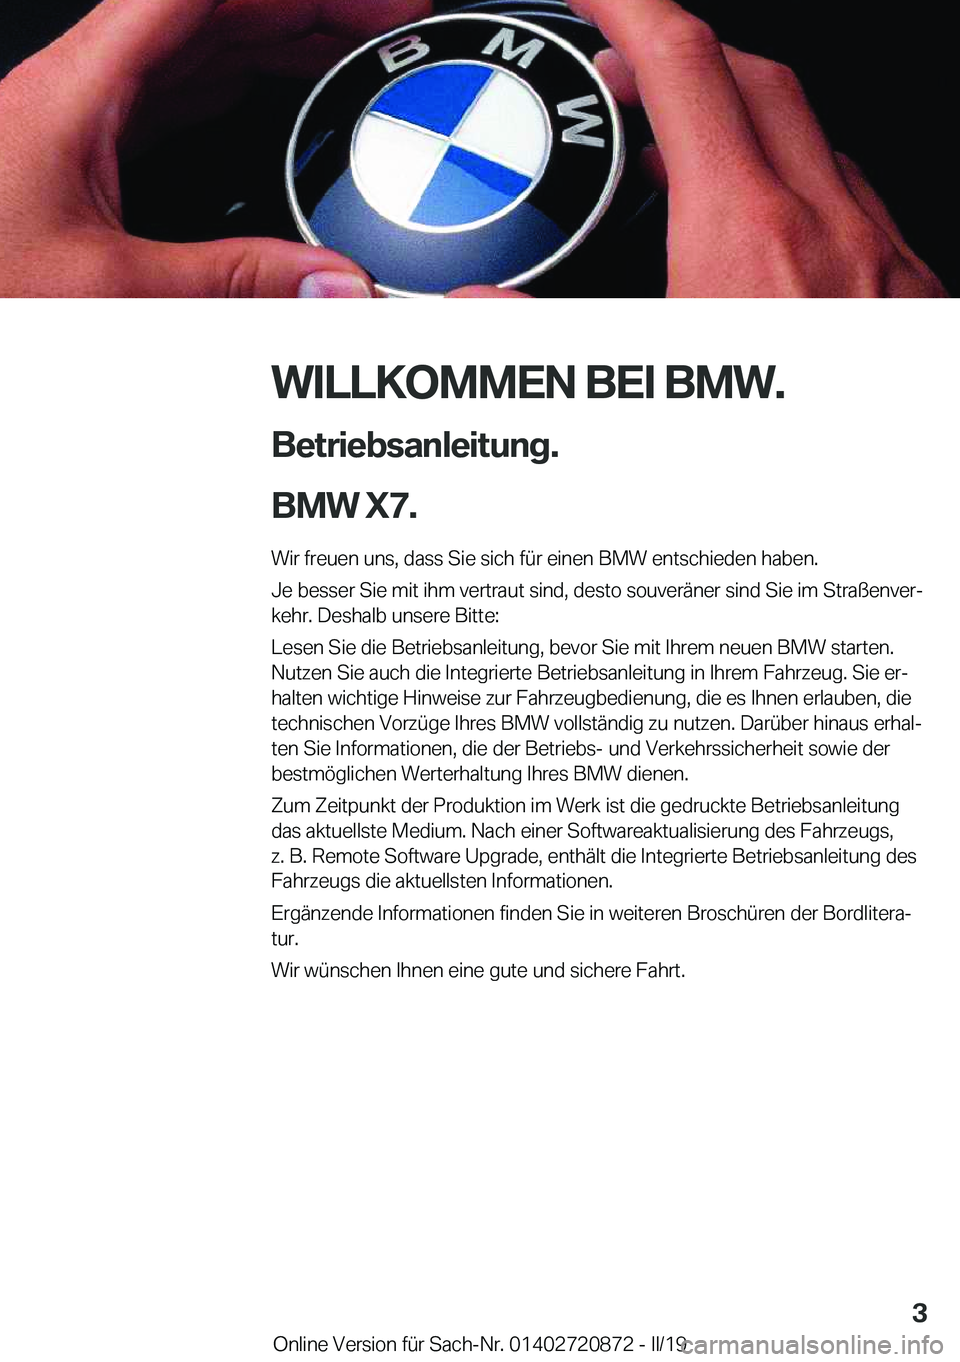 BMW X7 2019  Betriebsanleitungen (in German) �W�I�L�L�K�O�M�M�E�N��B�E�I��B�M�W�.�B�e�t�r�i�e�b�s�a�n�l�e�i�t�u�n�g�.
�B�M�W��X�7�. �W�i�r��f�r�e�u�e�n��u�n�s�,��d�a�s�s��S�i�e��s�i�c�h��f�